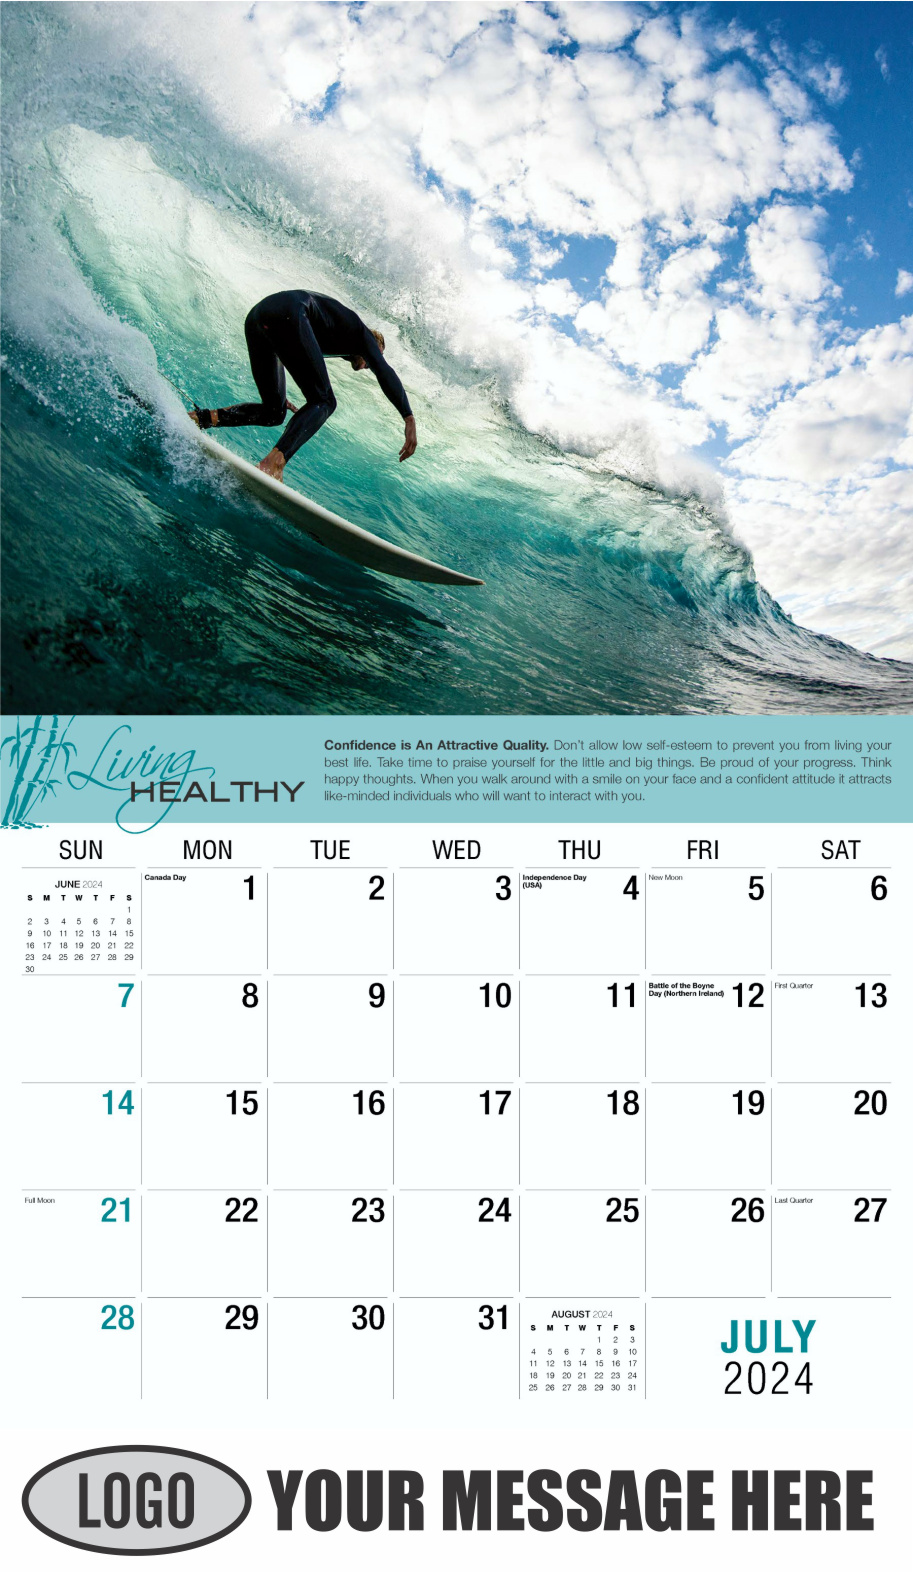 Living Healthy 2024 Business Promotional Calendar - July